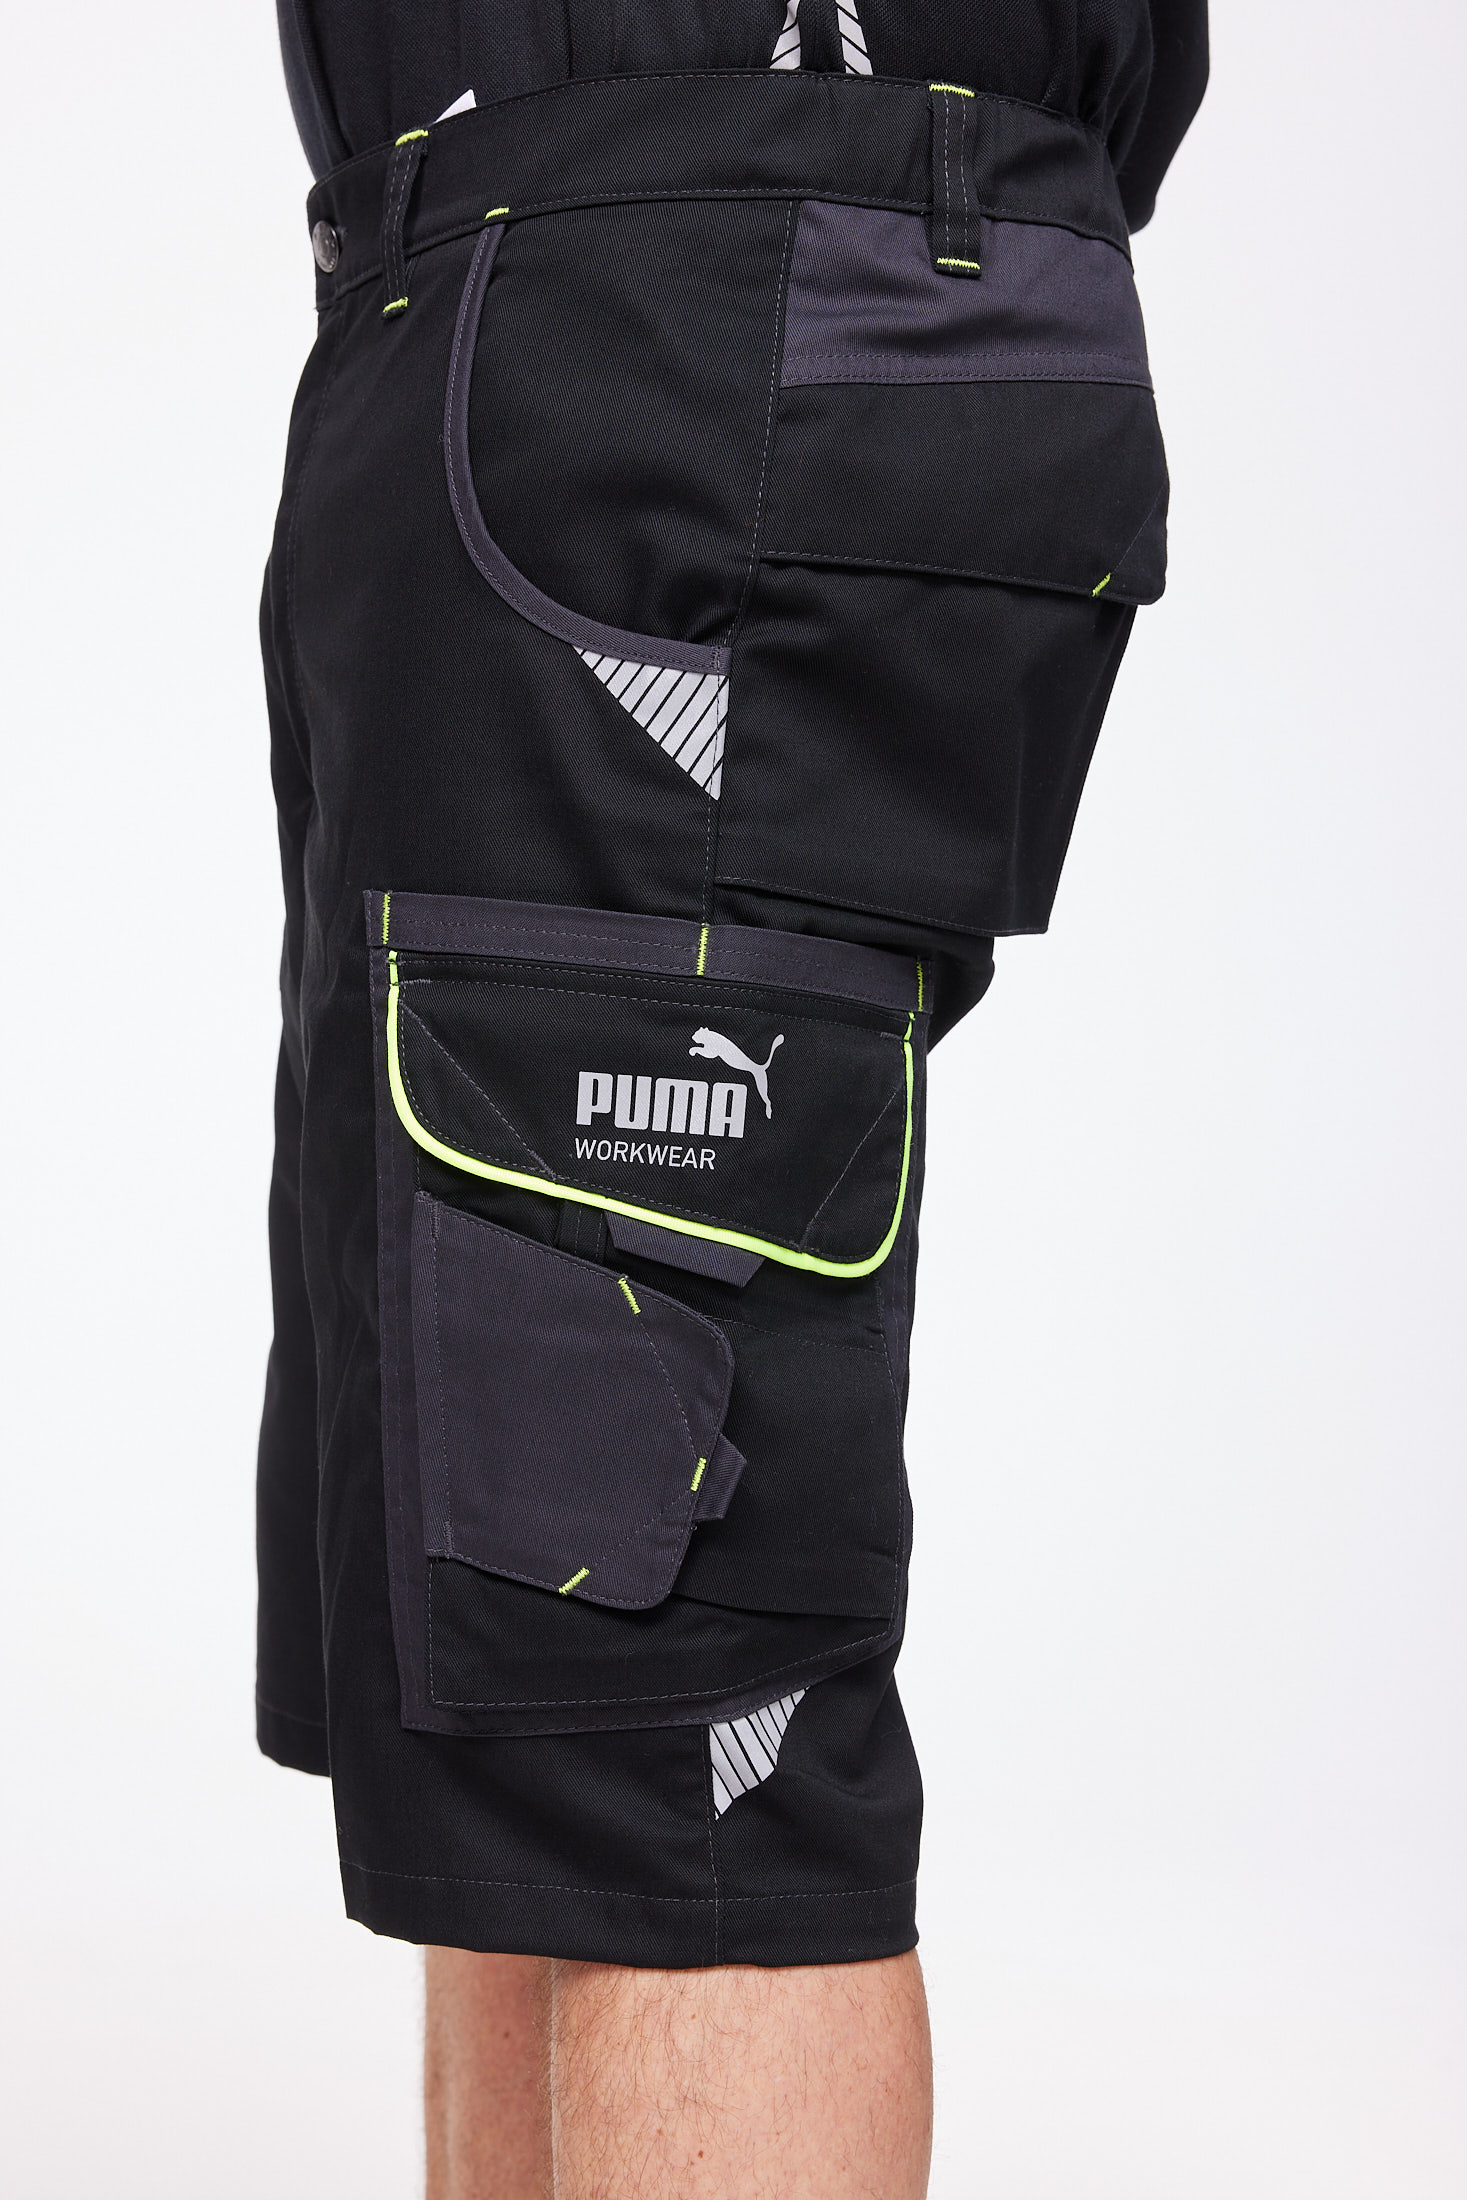 PUMA Workwear Precision X Herren Shorts | Puma Workwear | Shorts